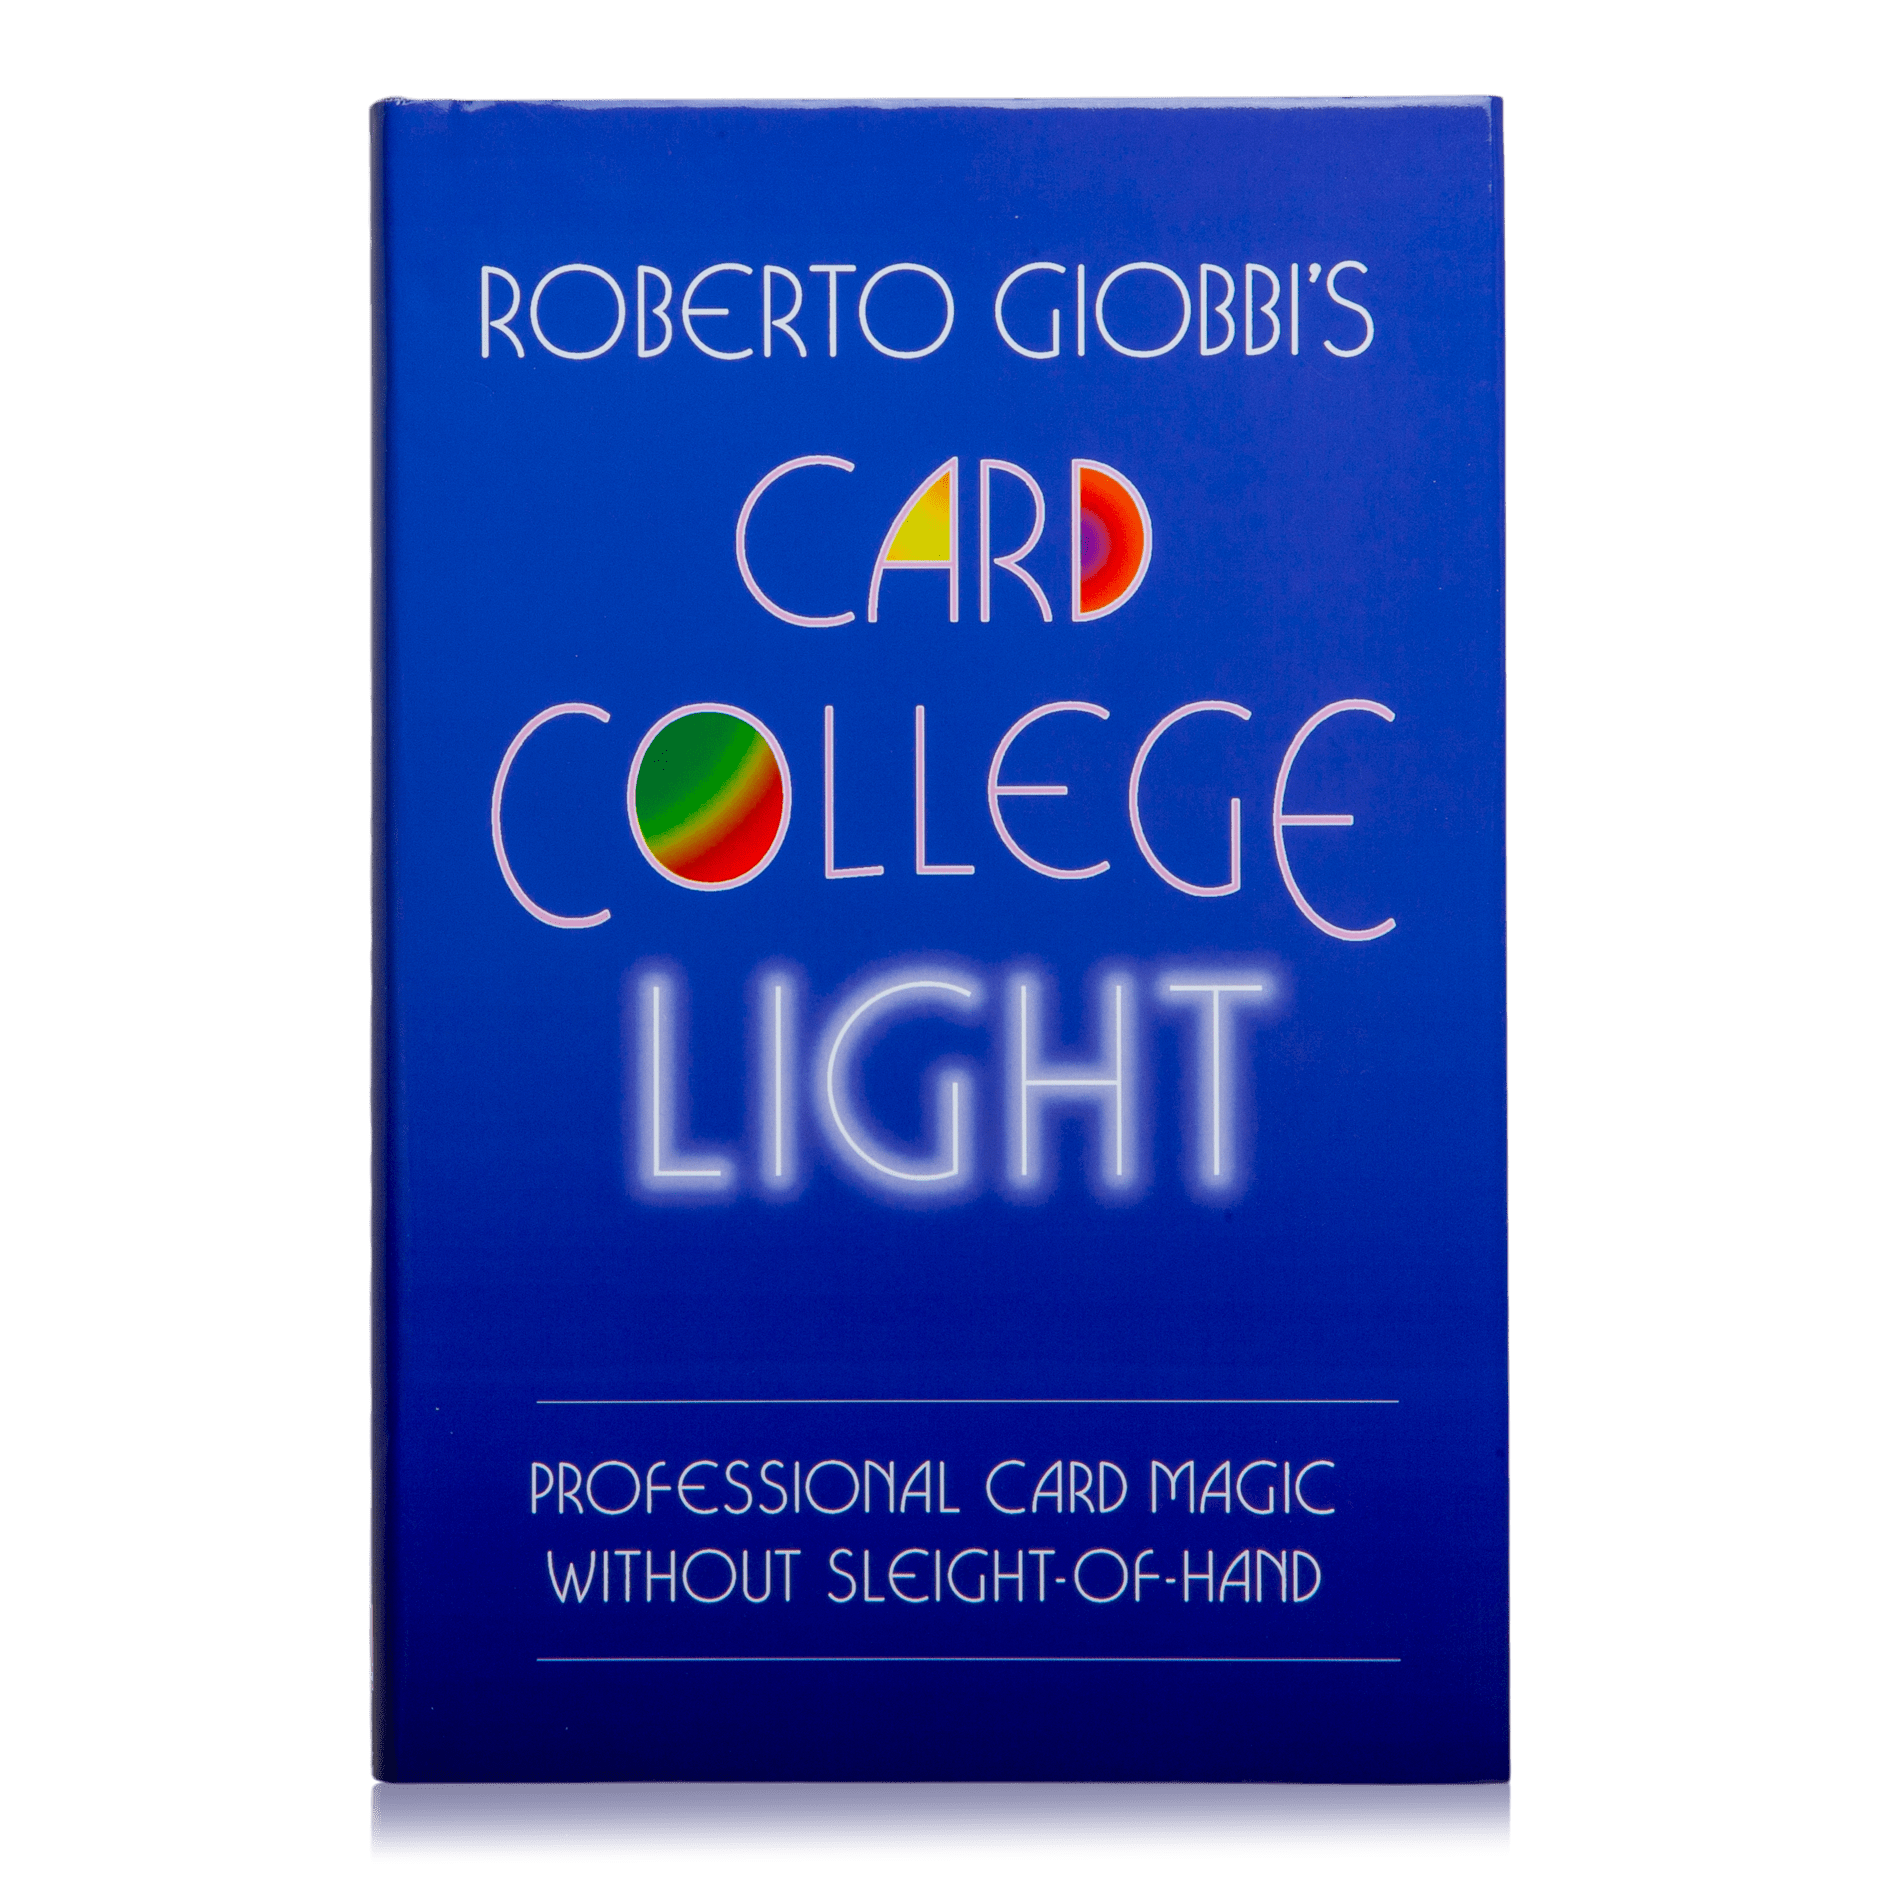 Card College Light